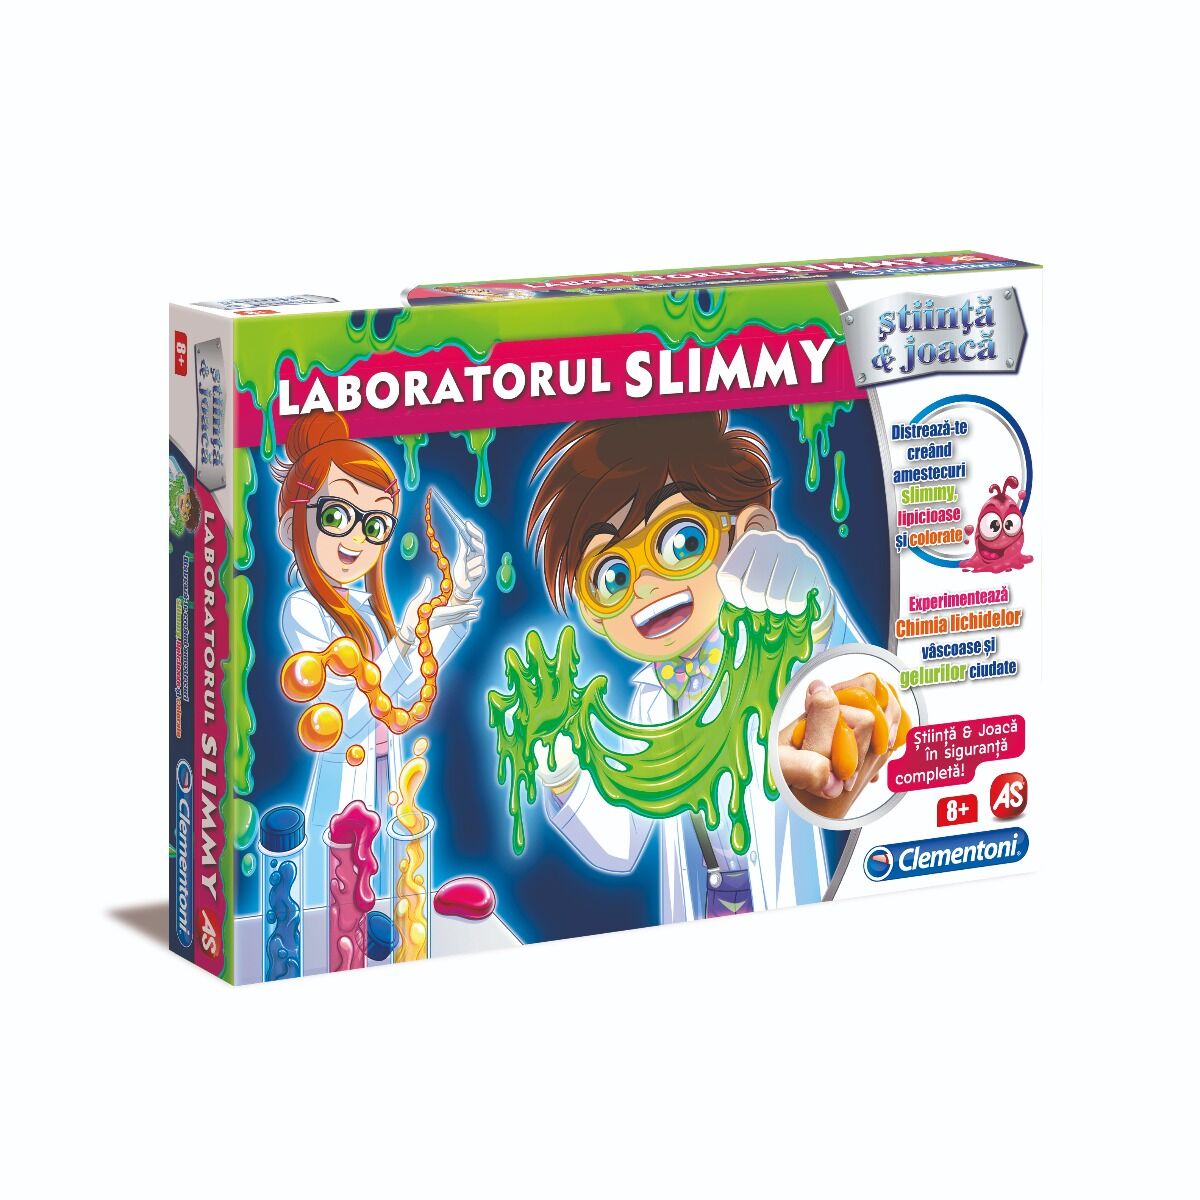 Laboratorul Slimmy - Stiinta & joaca, Clementoni